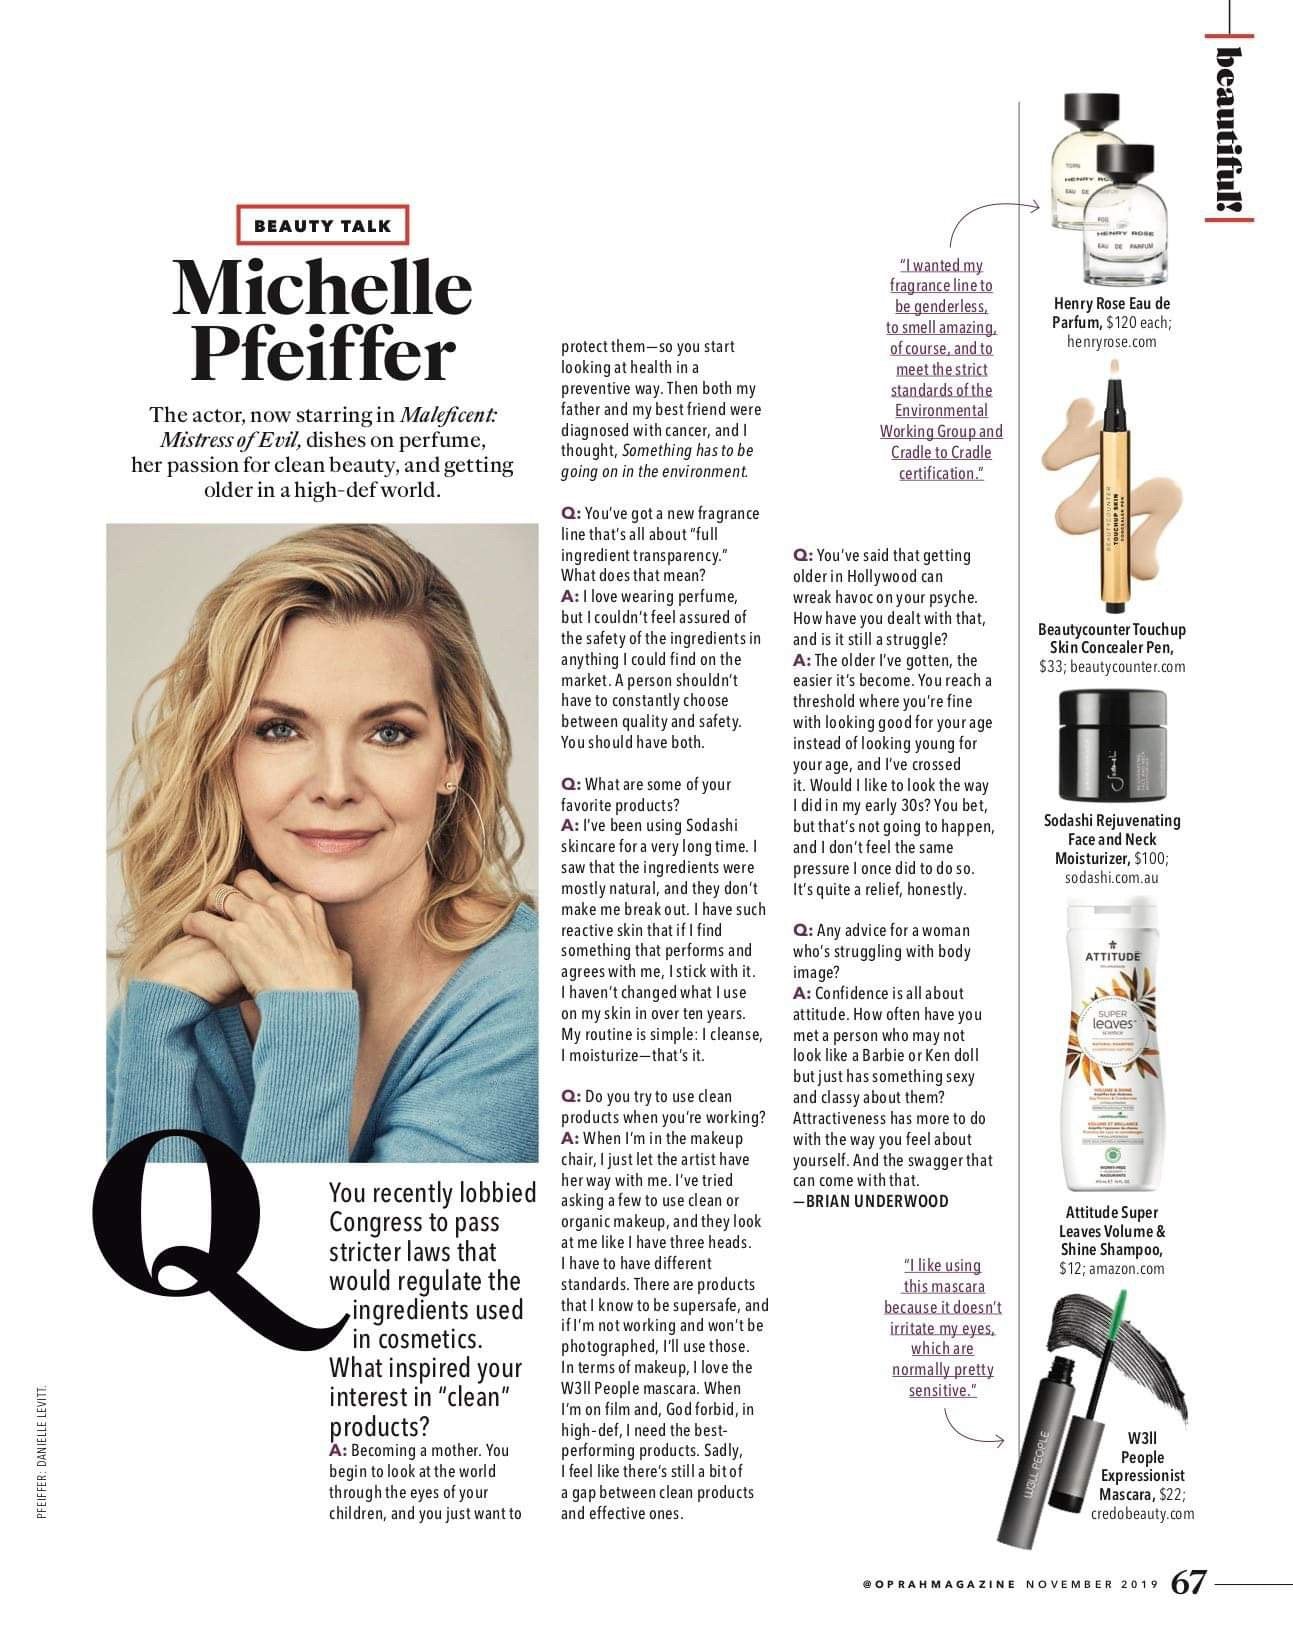 Le shampoing favori de Michelle Pfeiffer tel que vu dans O, The Oprah Magazine_fr?_team? general